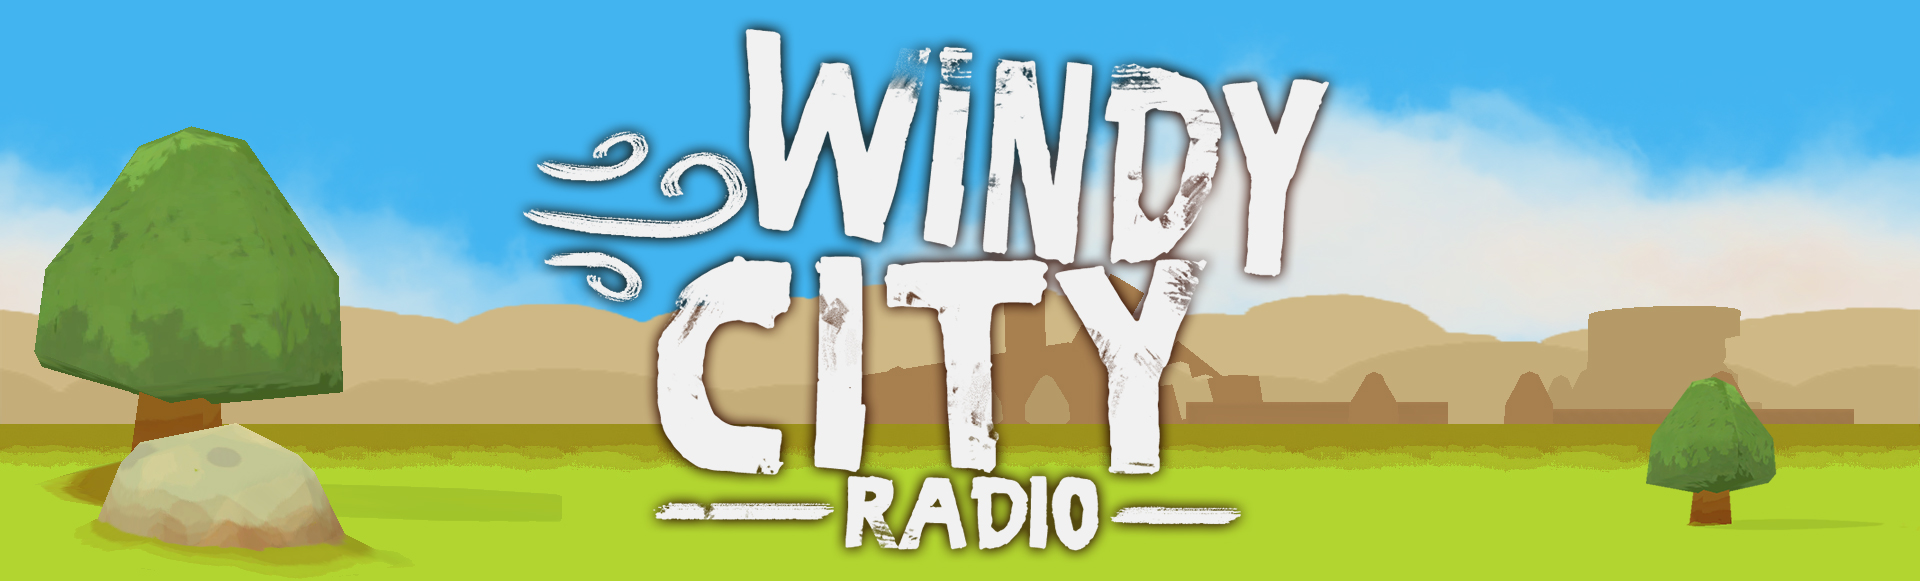 Windy City Radio - Jam Version.